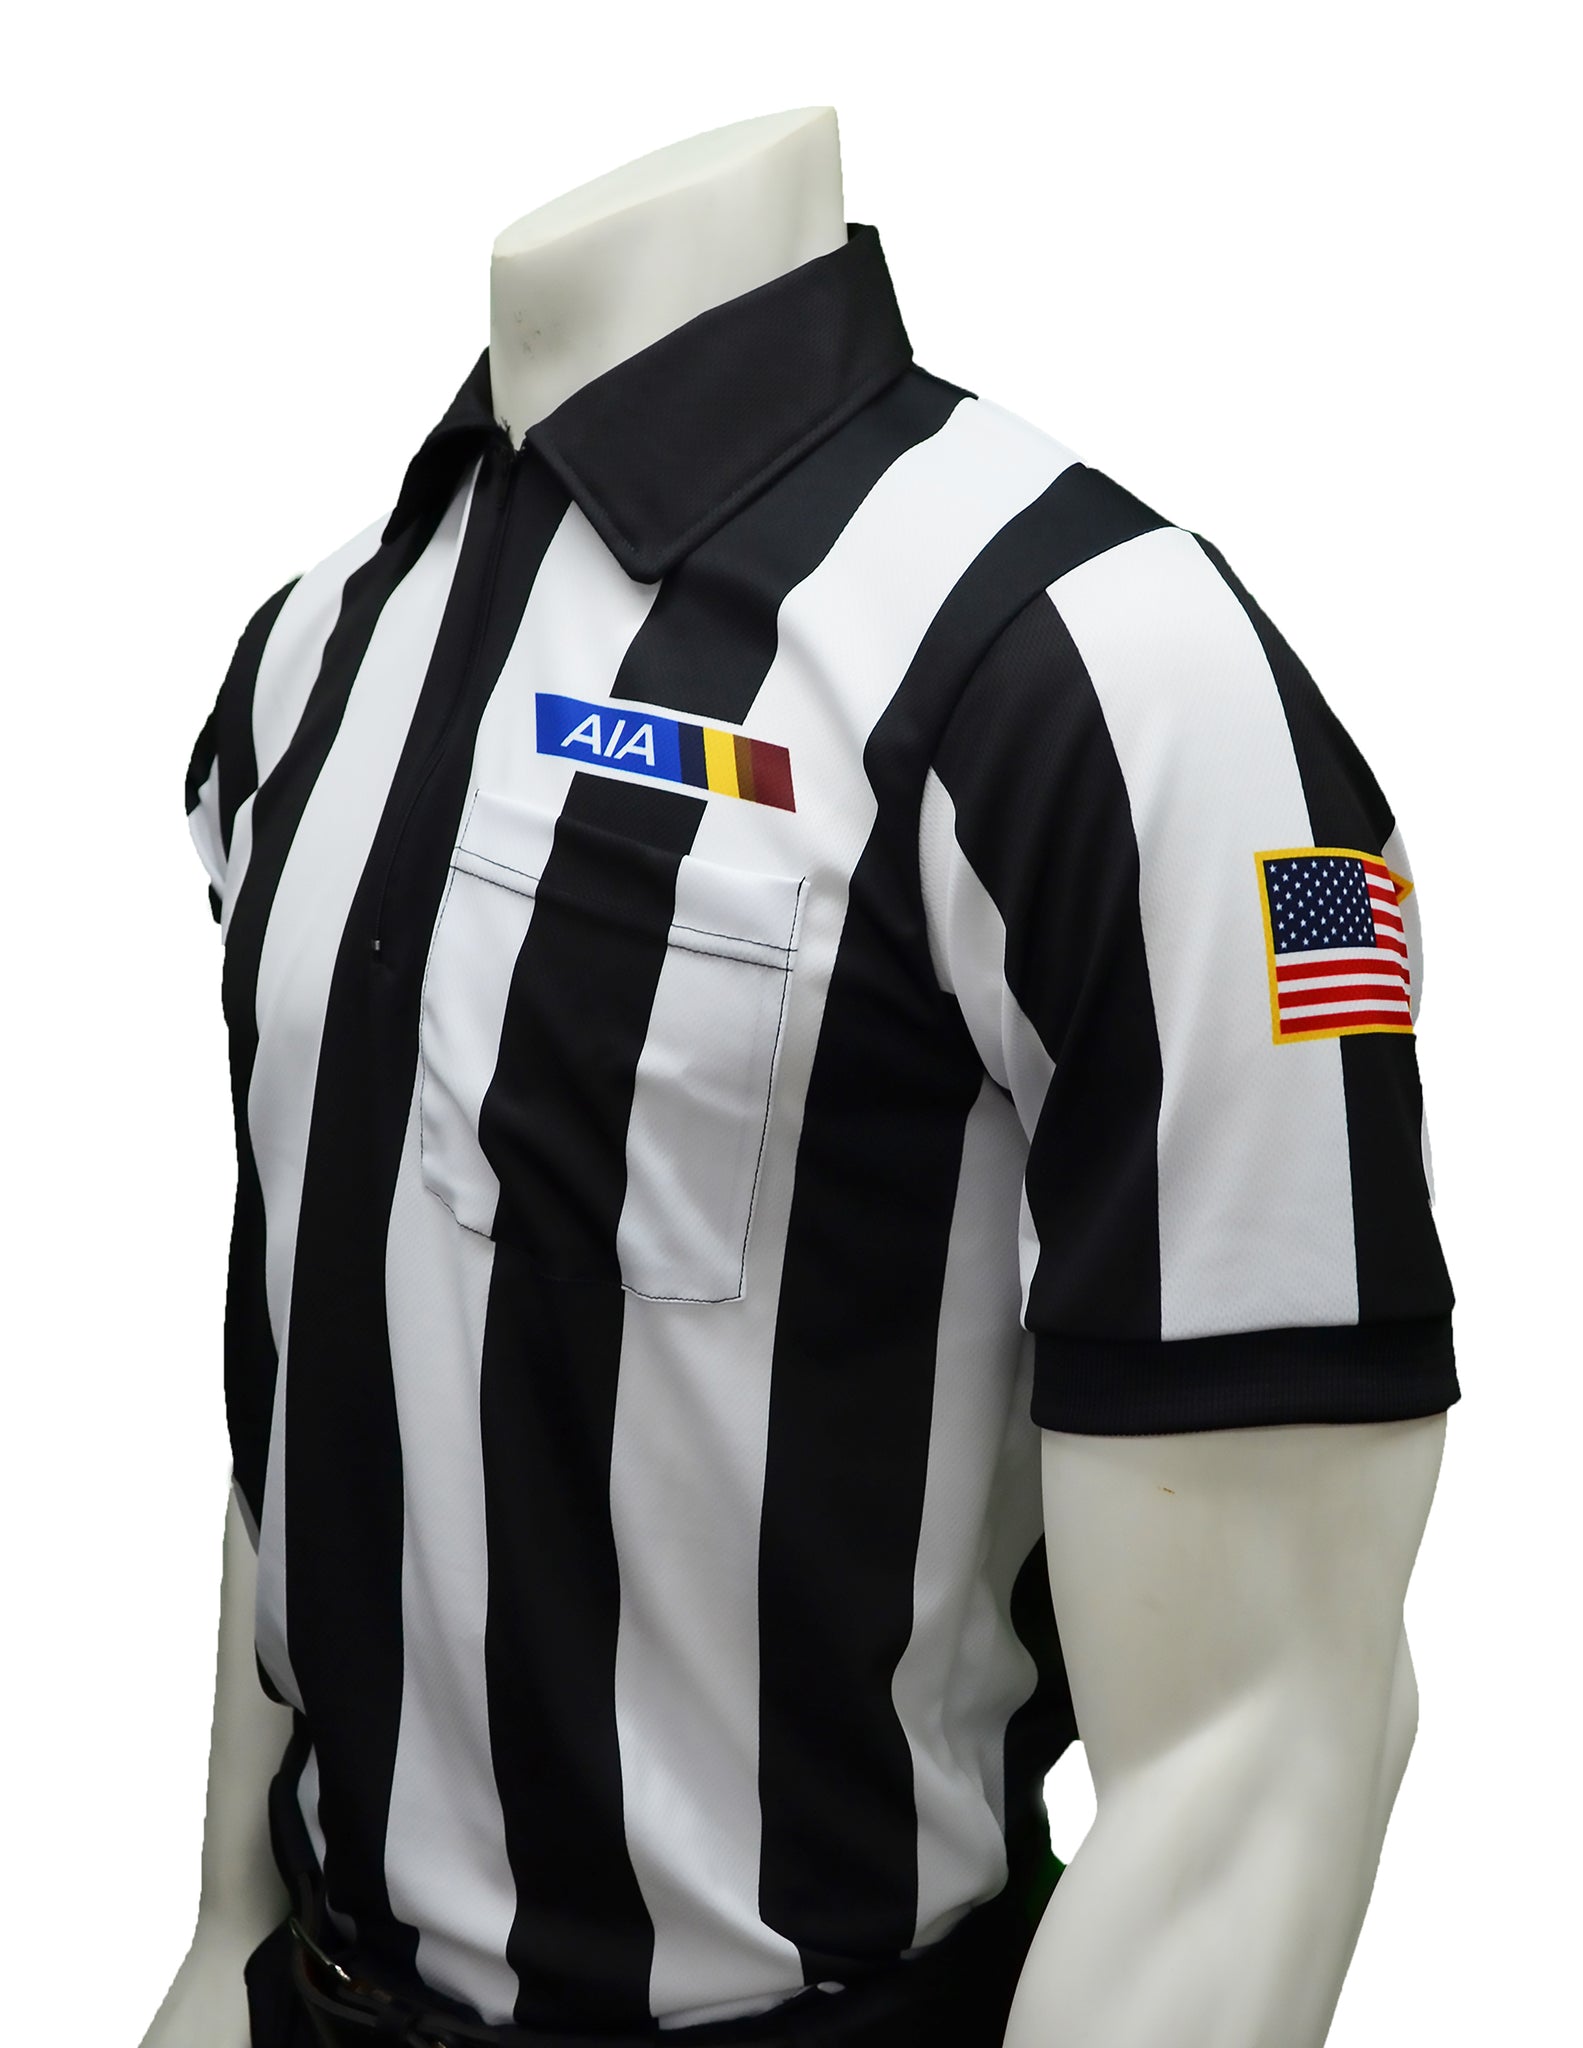 USA142AZ-607 - Smitty "Made in USA" - "BODY FLEX" Football Men's Short Sleeve Shirt - Flag, No Position Letter